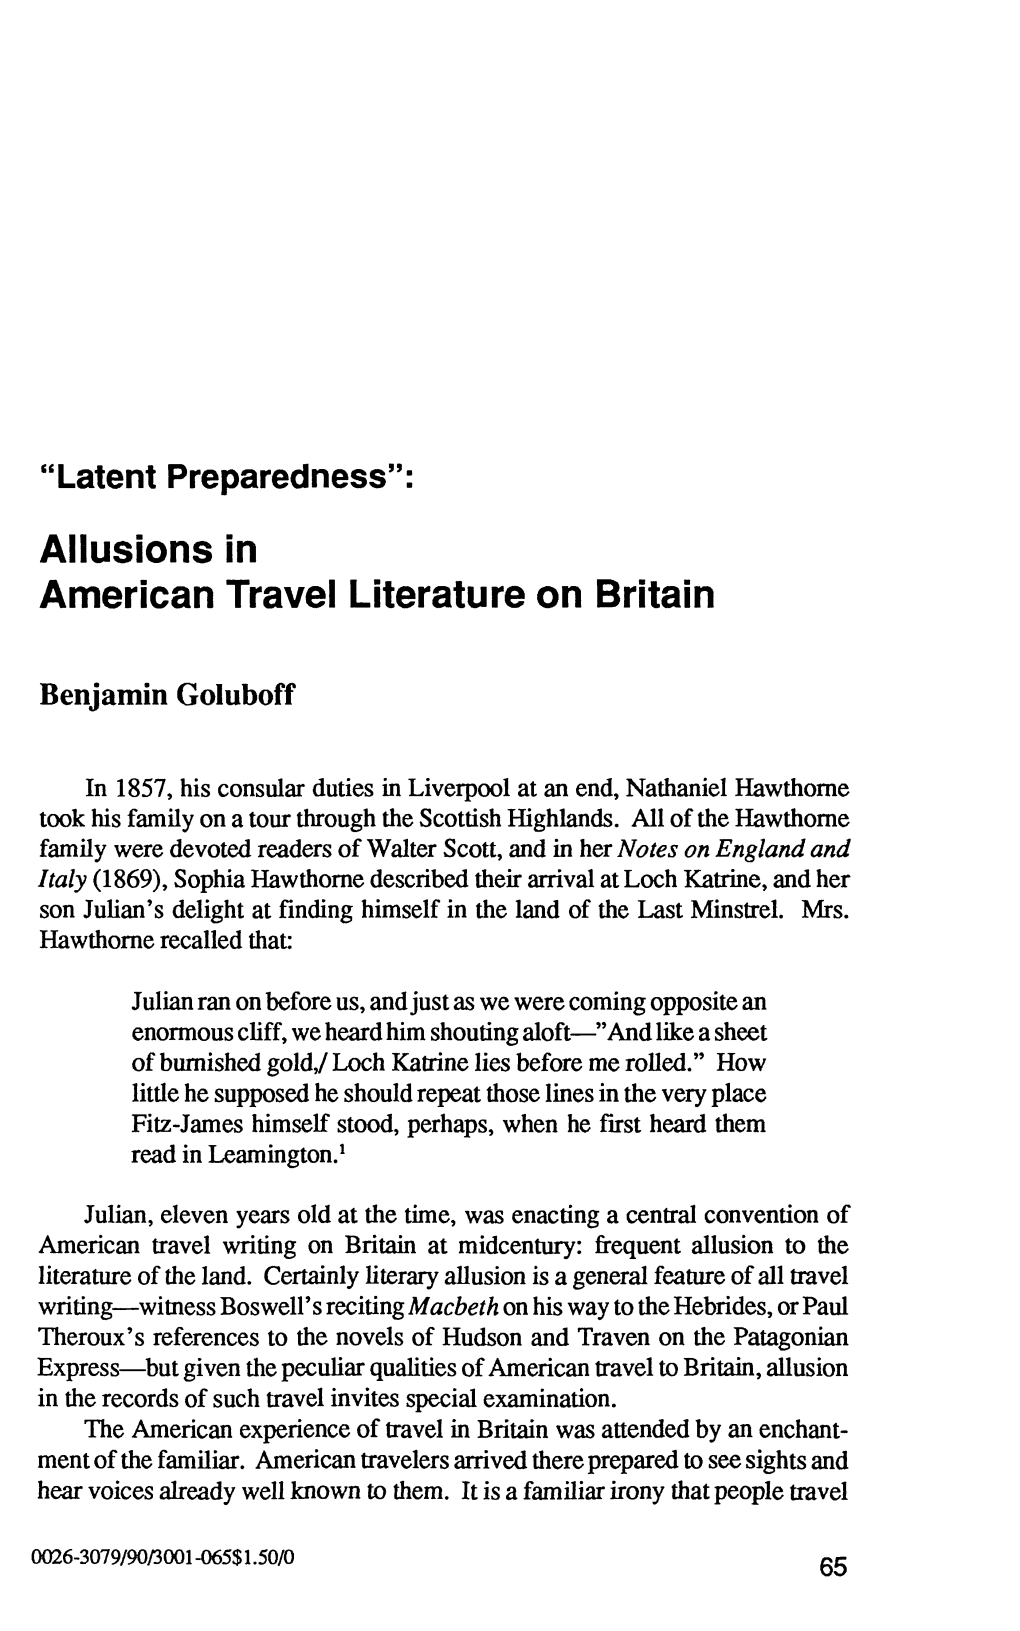 Allusions in American Travel Literature on Britain